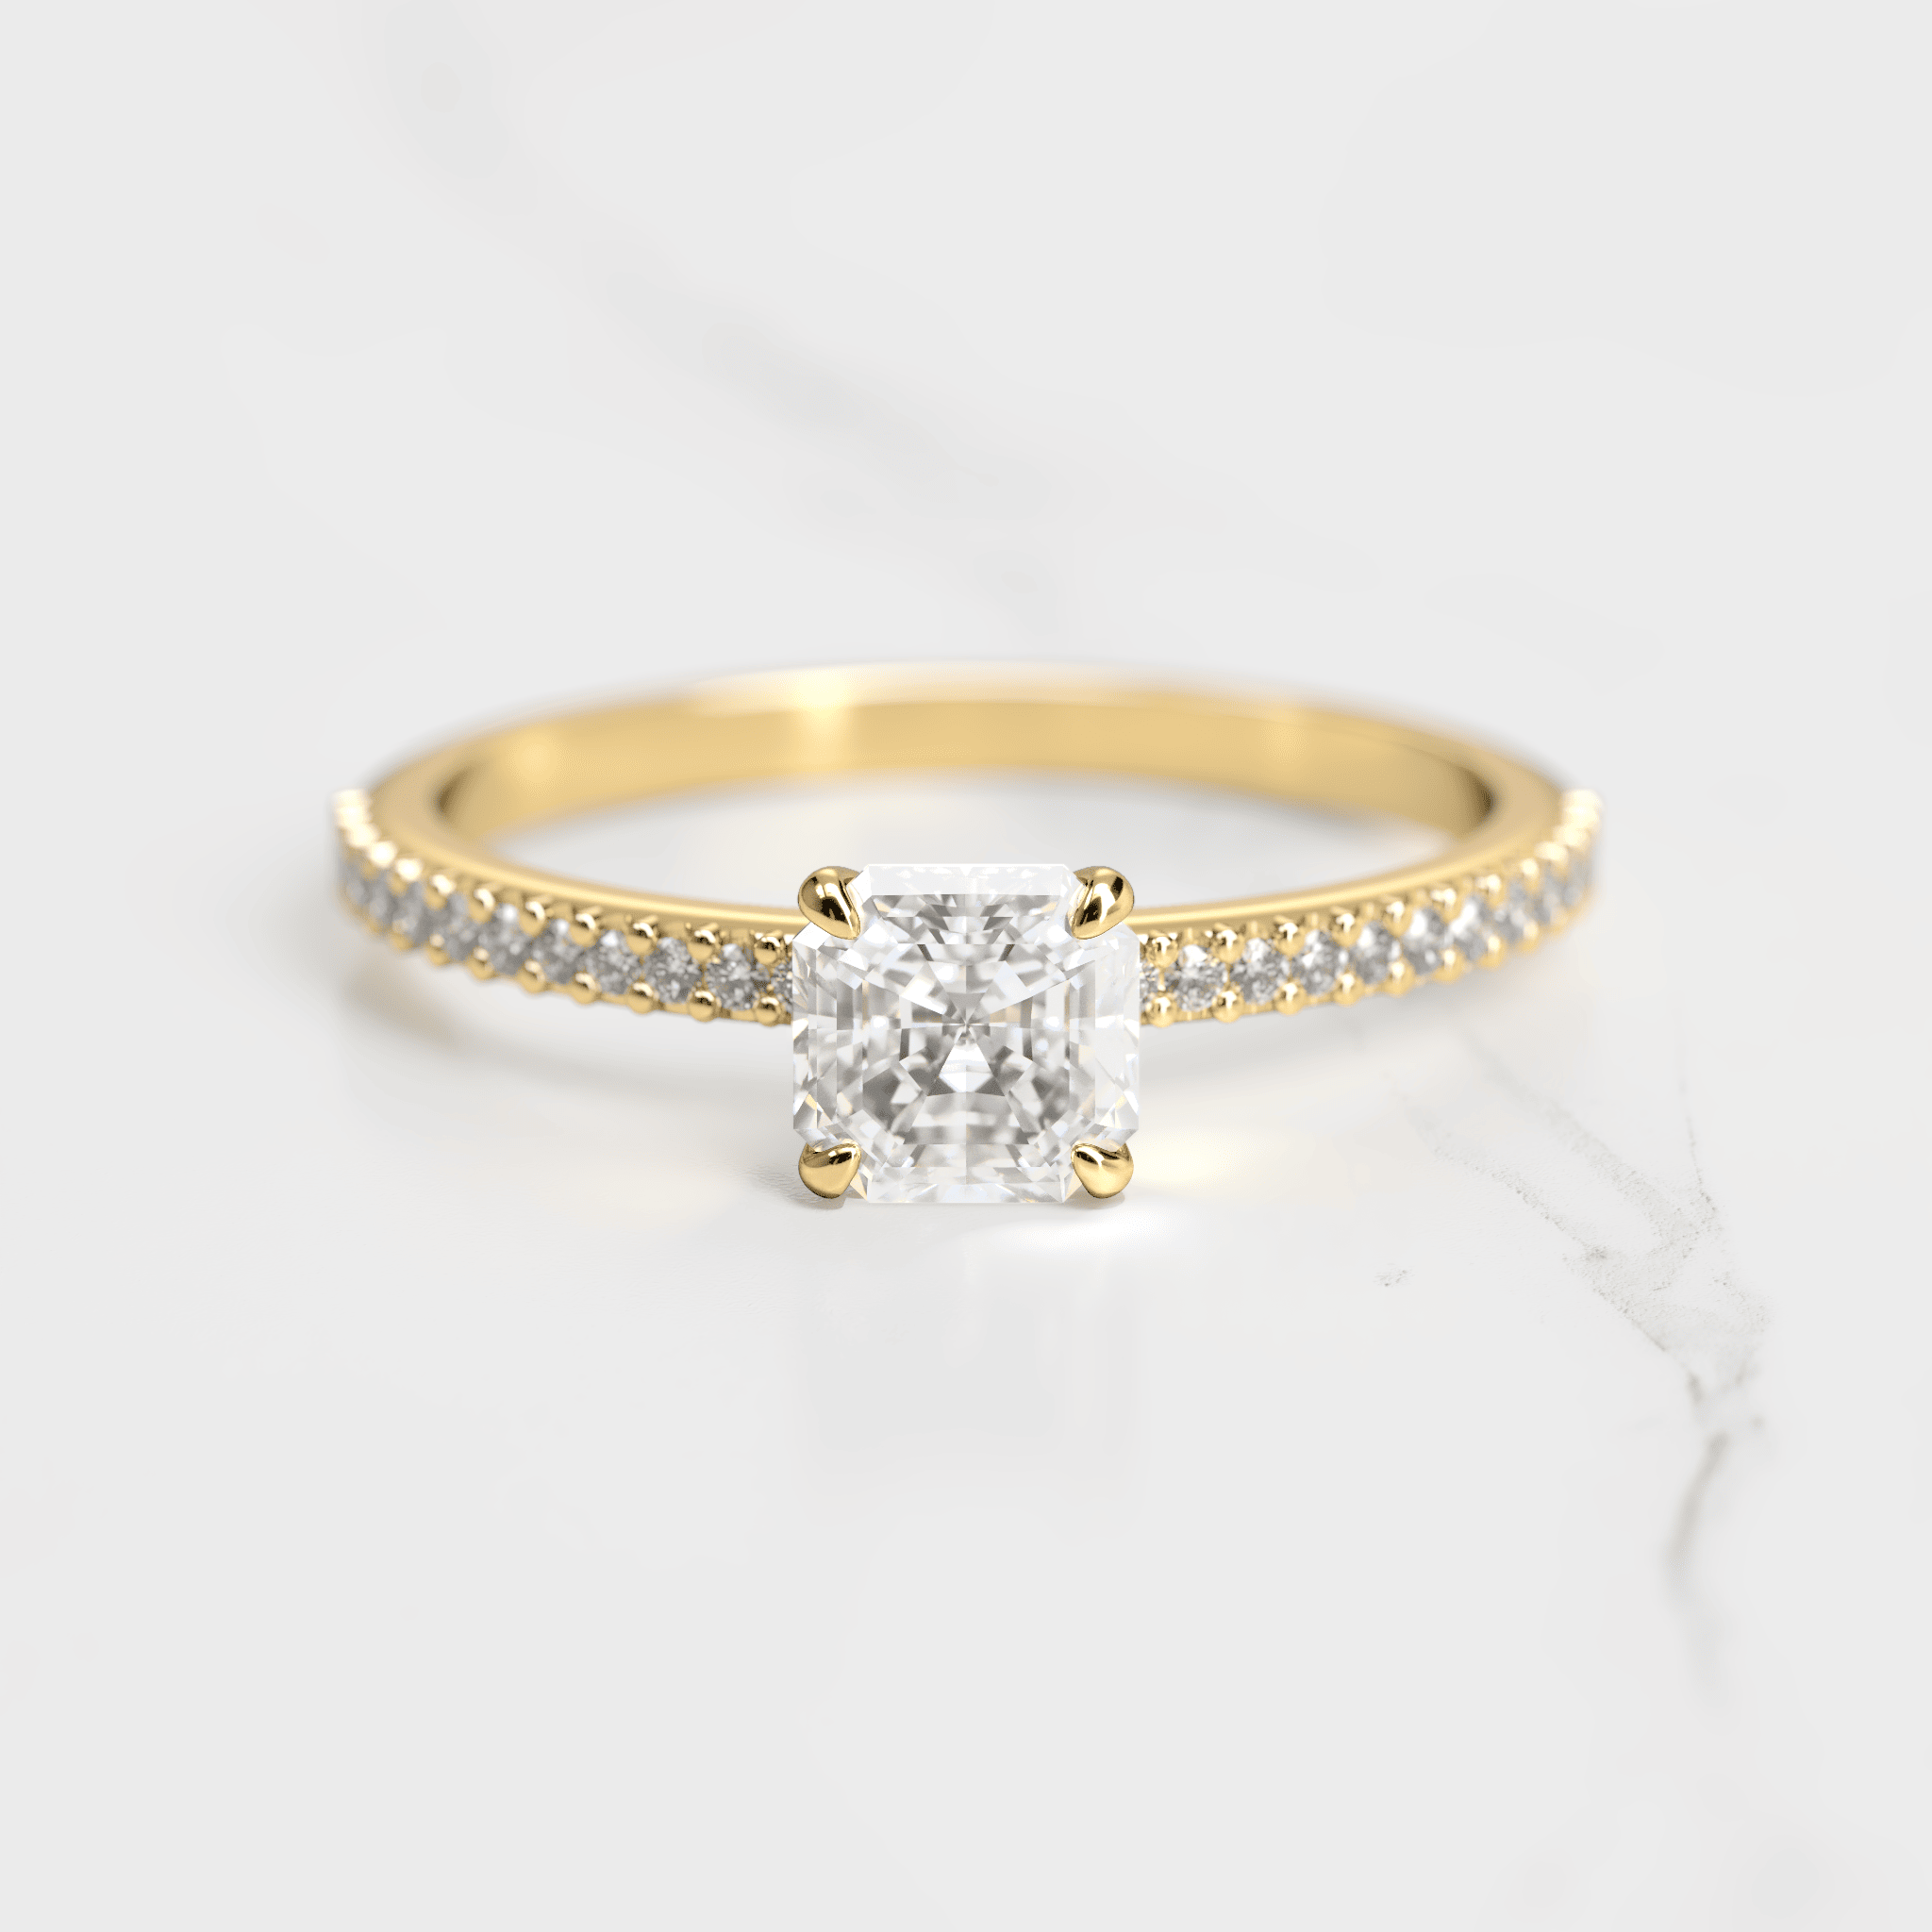 ASSCHER HALF PAVE DIAMOND RING - 18k yellow gold / 0.5ct / lab diamond